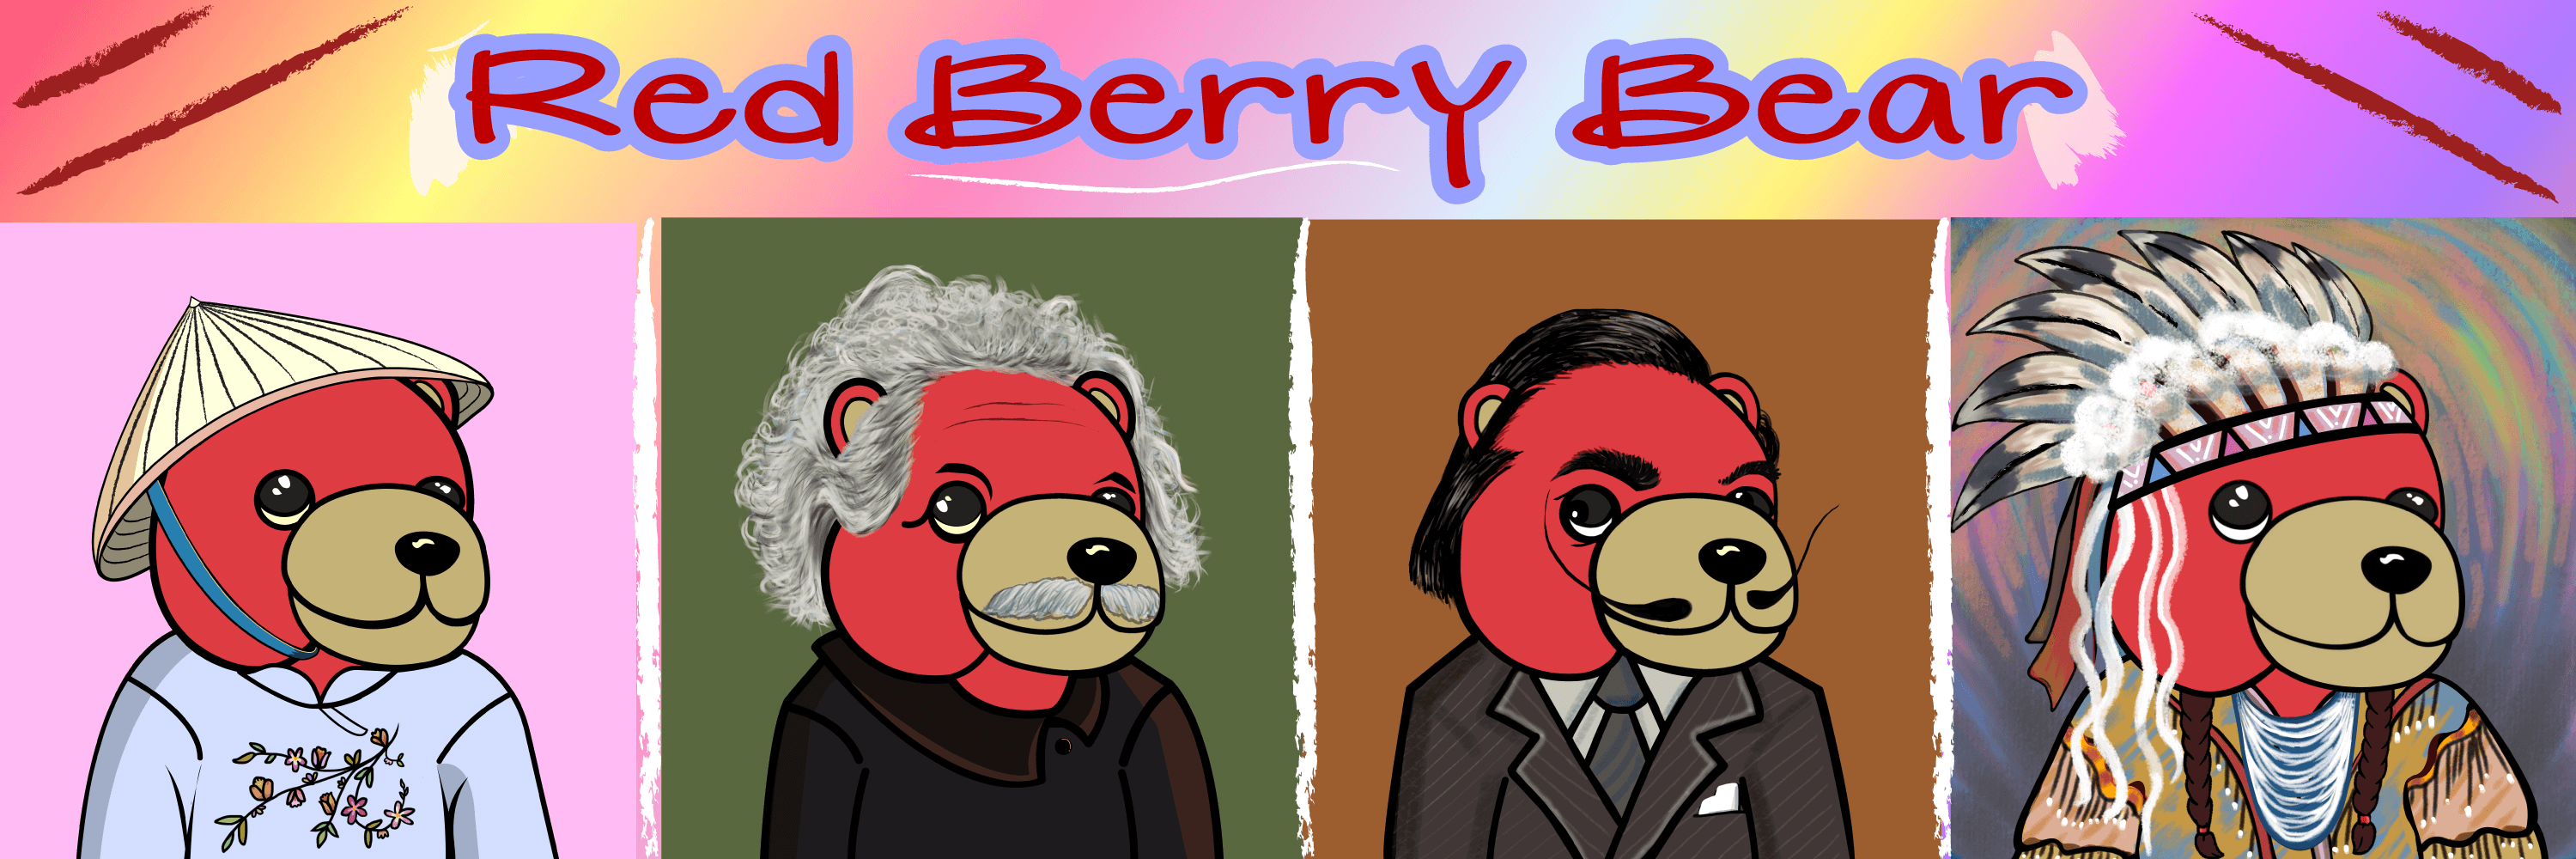 Red_Berry_Bear 橫幅